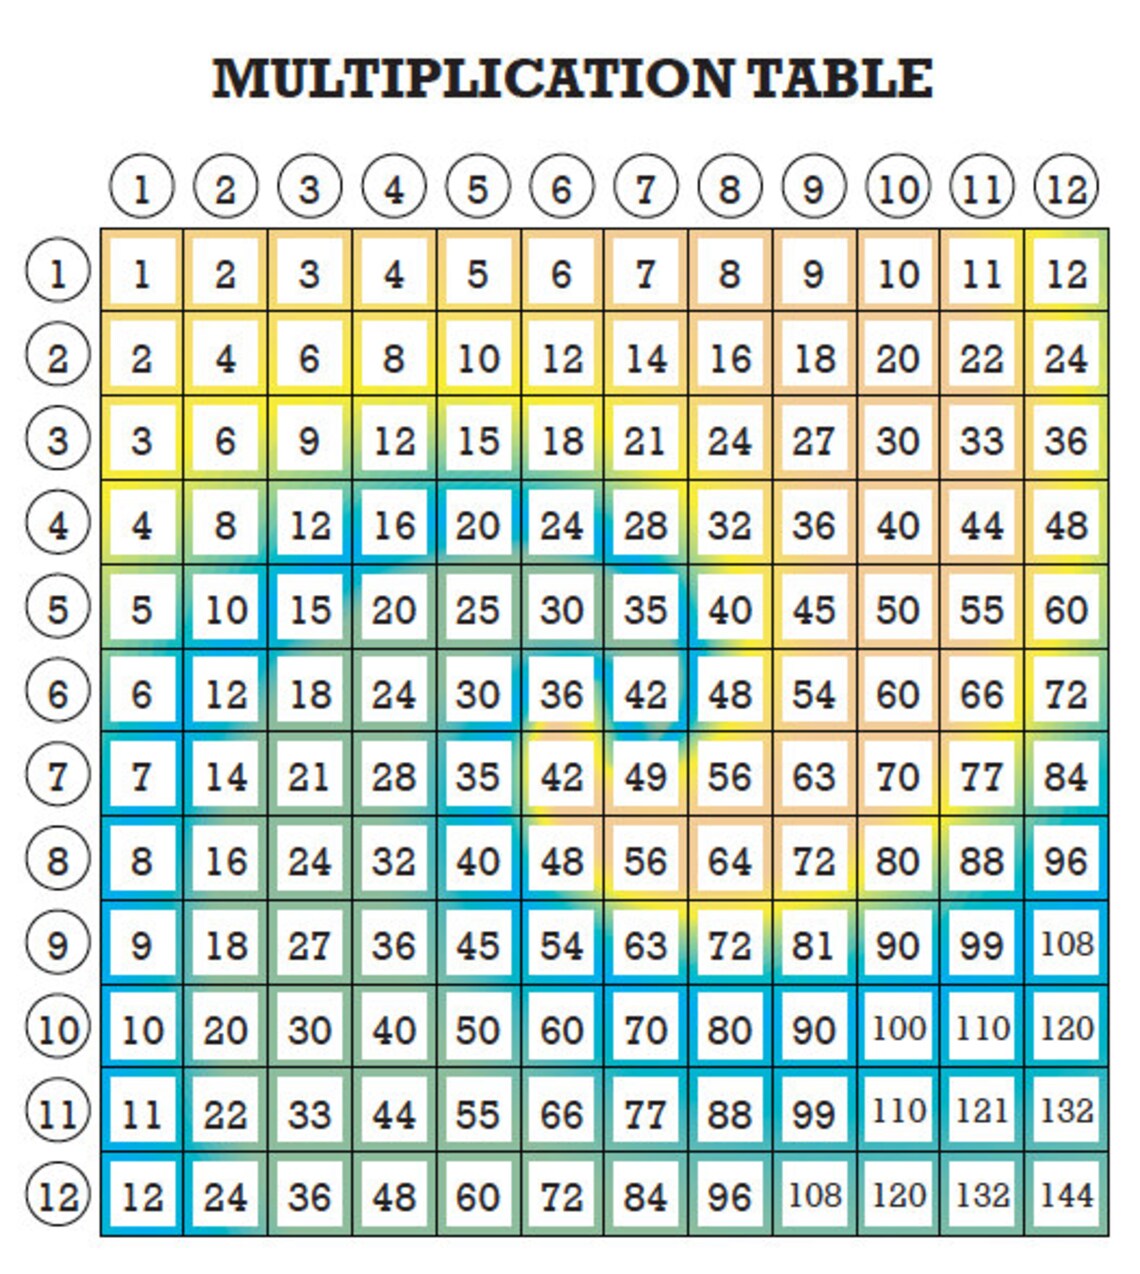 5 Rainbow Multiplication Tables for Kids Fun Math Printable | Etsy